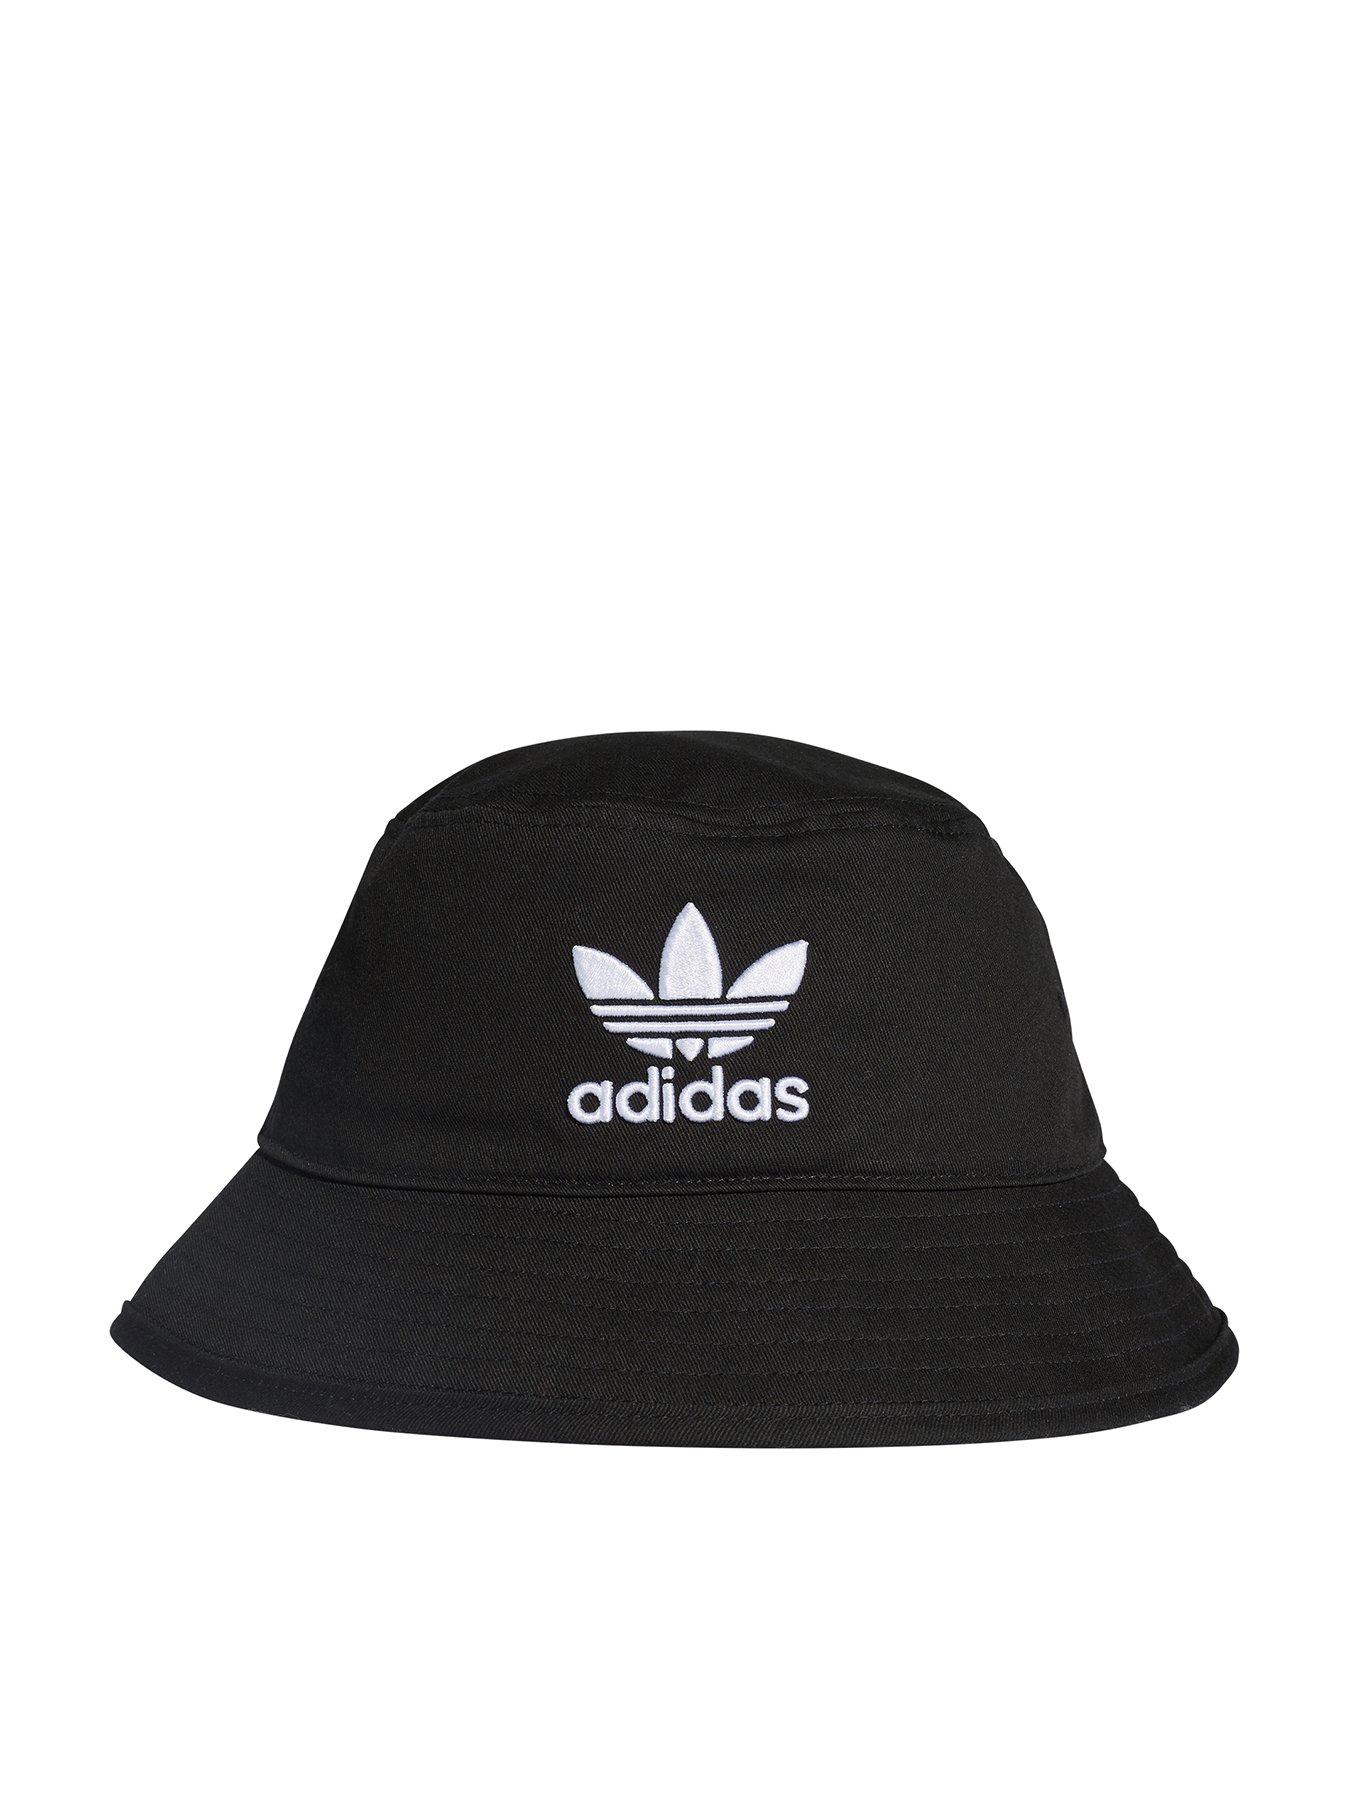 black and white adidas bucket hat